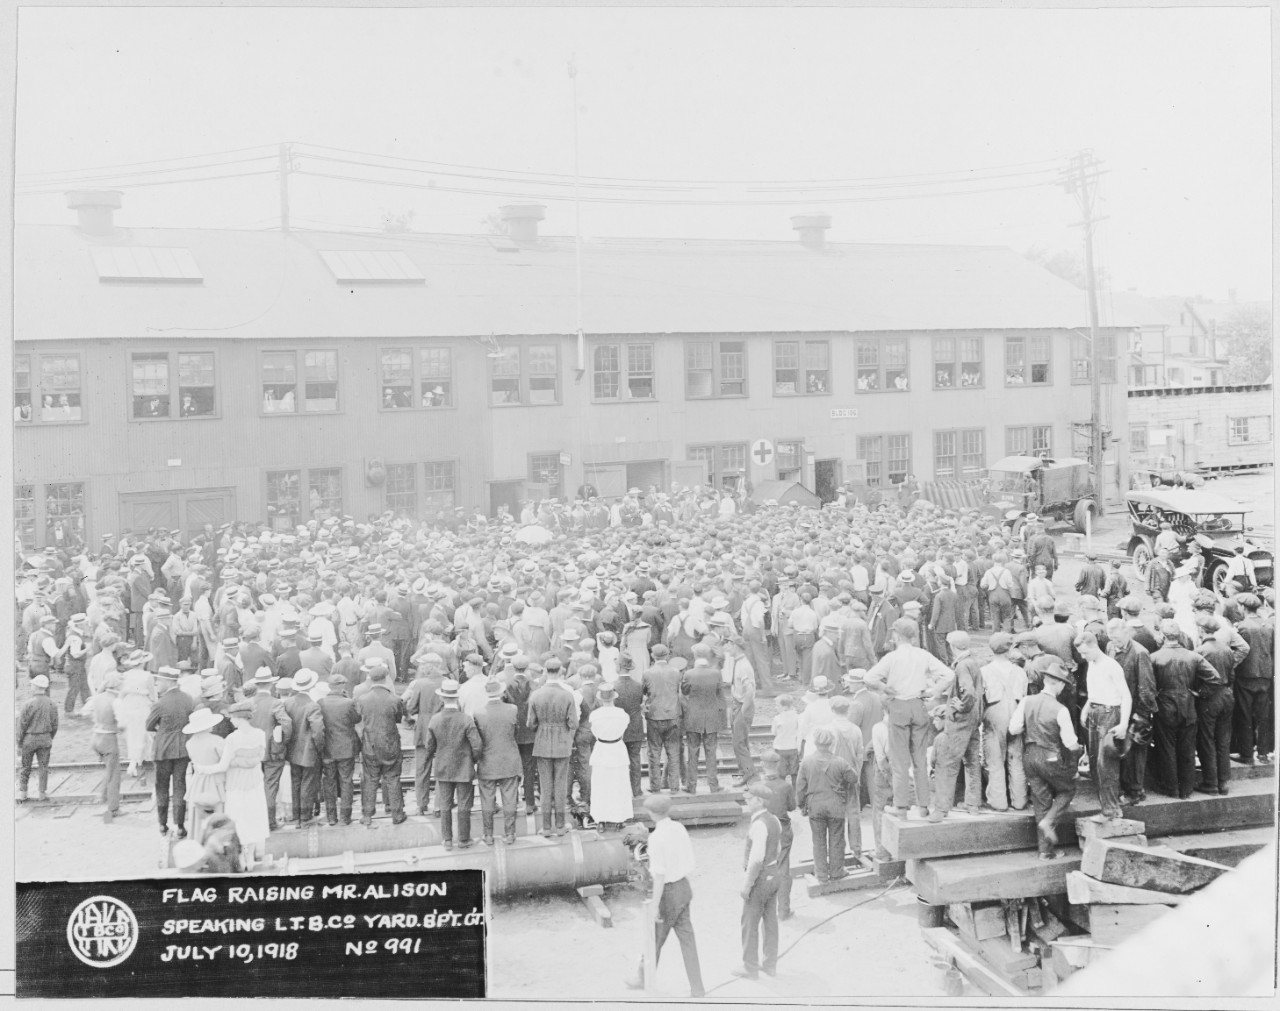 Flag Raising, Mr. Alison speaking on July 10, 1918 at Lake Torpedo Boat Company, Bridgeport, Connecticut